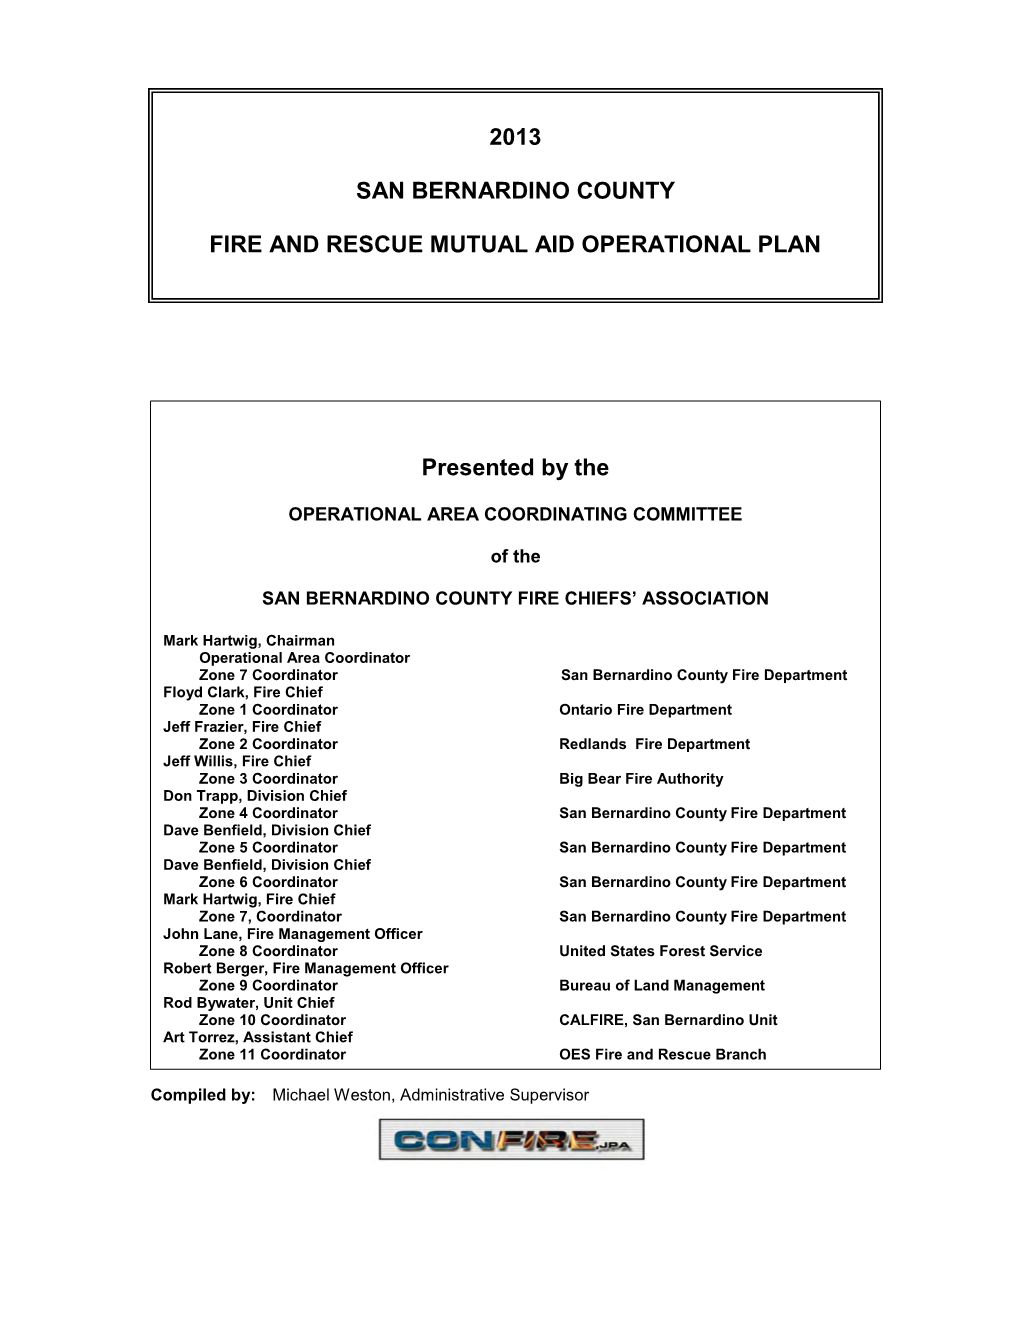 2013 San Bernardino County Fire and Rescue Mutual Aid